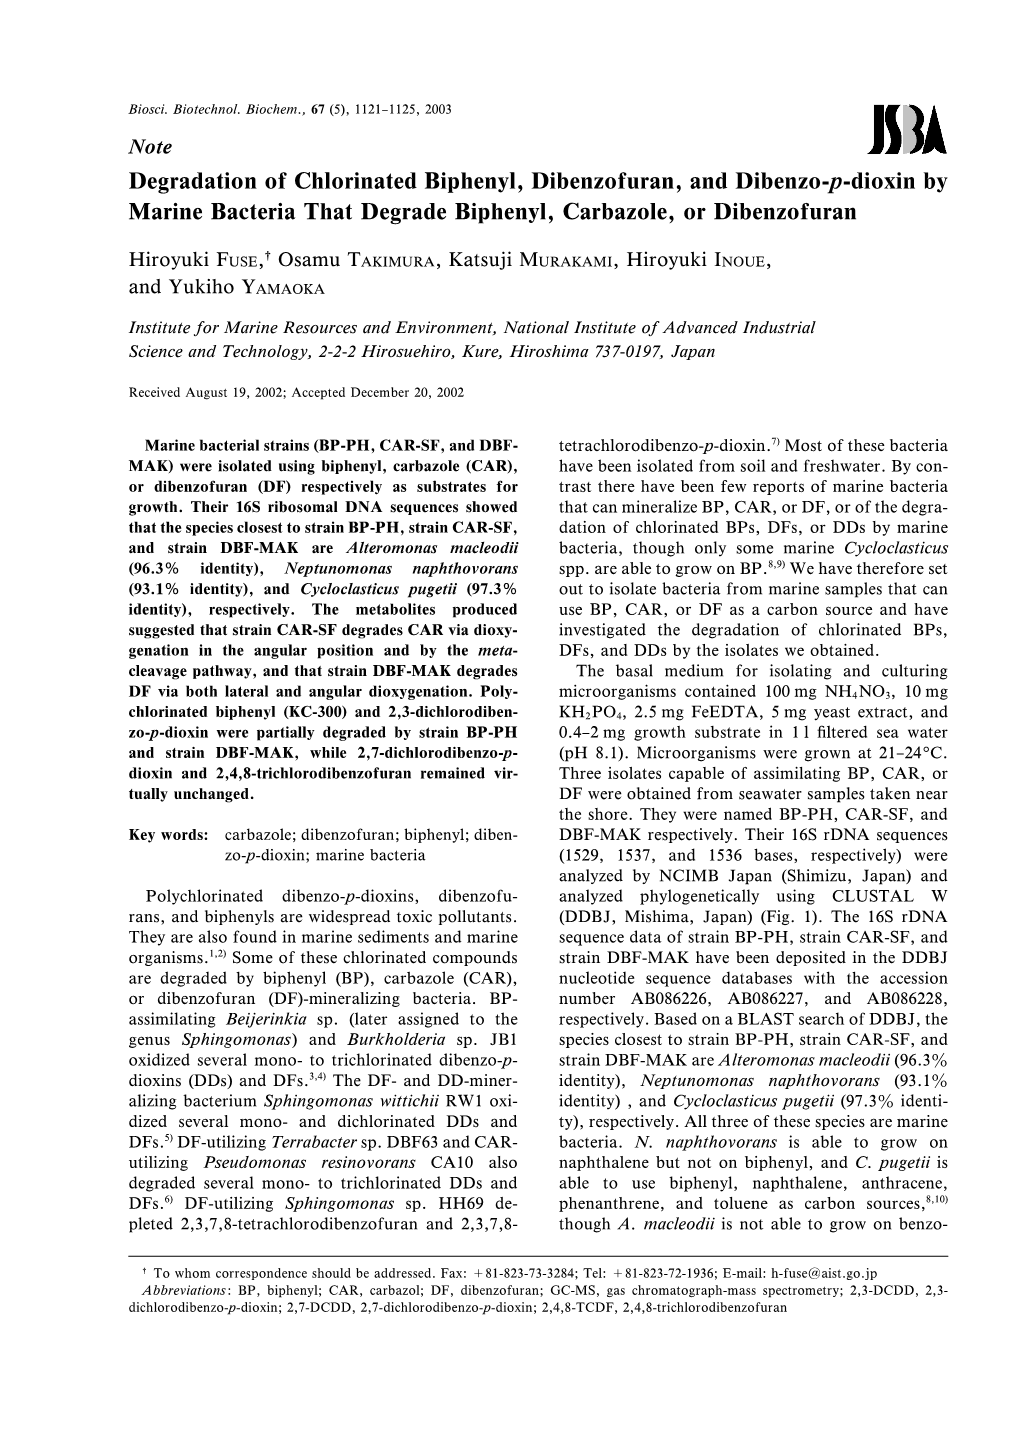 Degradation of Chlorinated Biphenyl, Dibenzofuran, and Dibenzo-P-Dioxin by Marine Bacteria That Degrade Biphenyl, Carbazole, Or Dibenzofuran